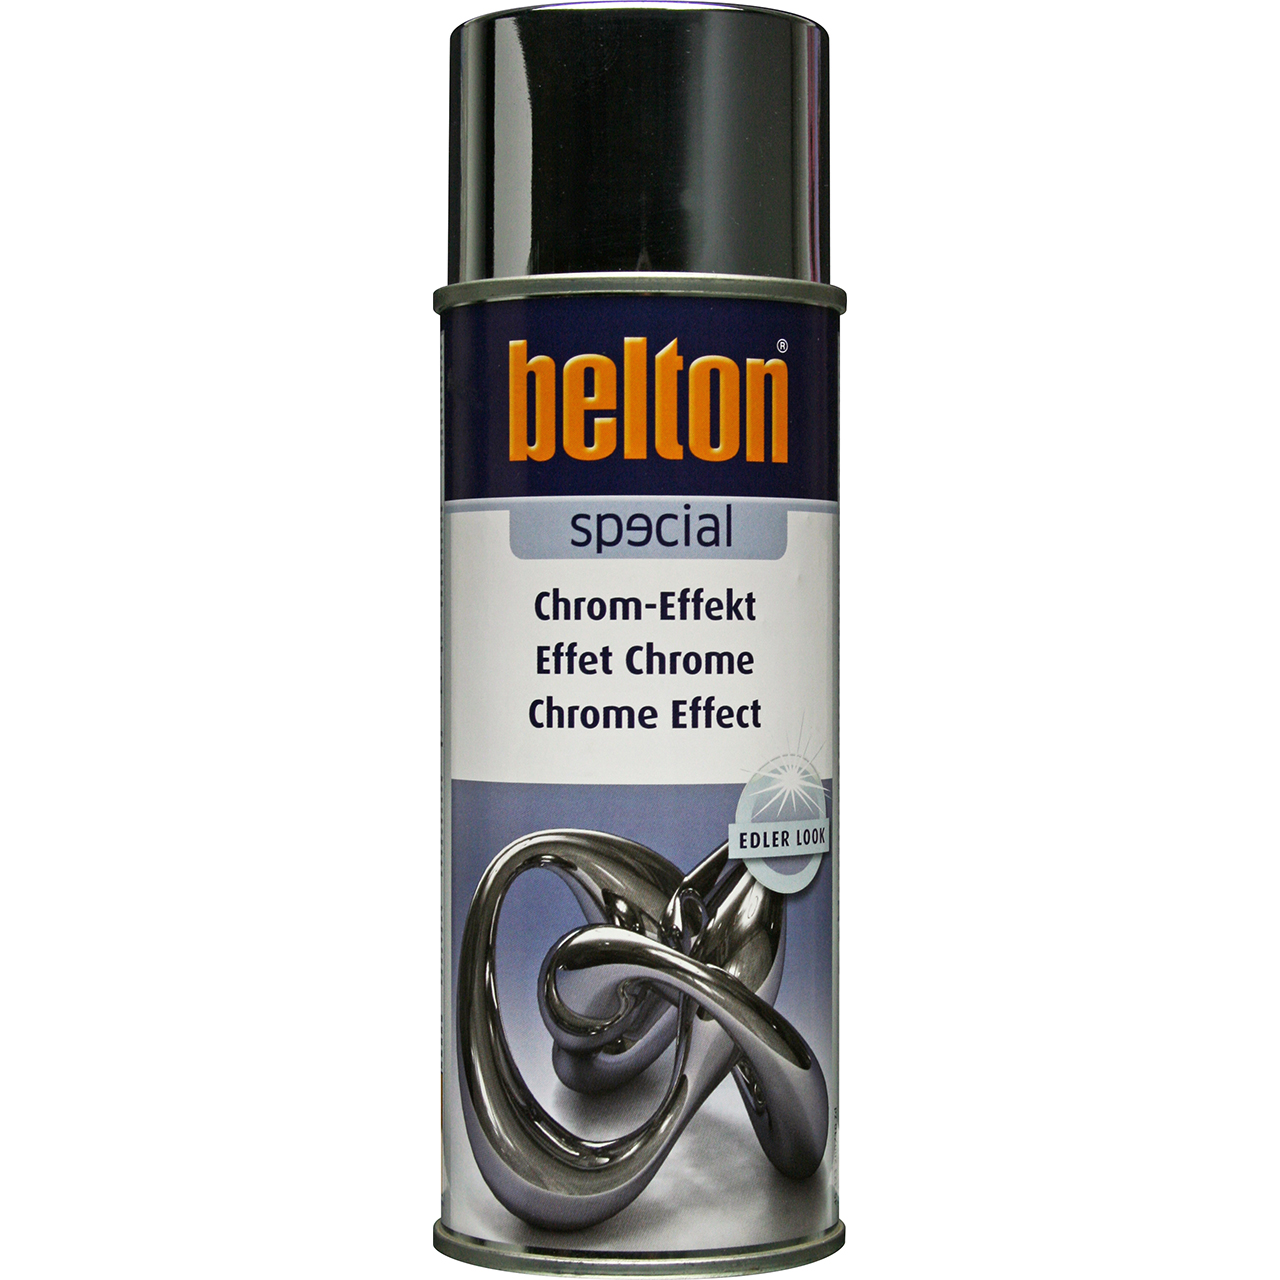 belton Special Chrom-Effekt, 400ml